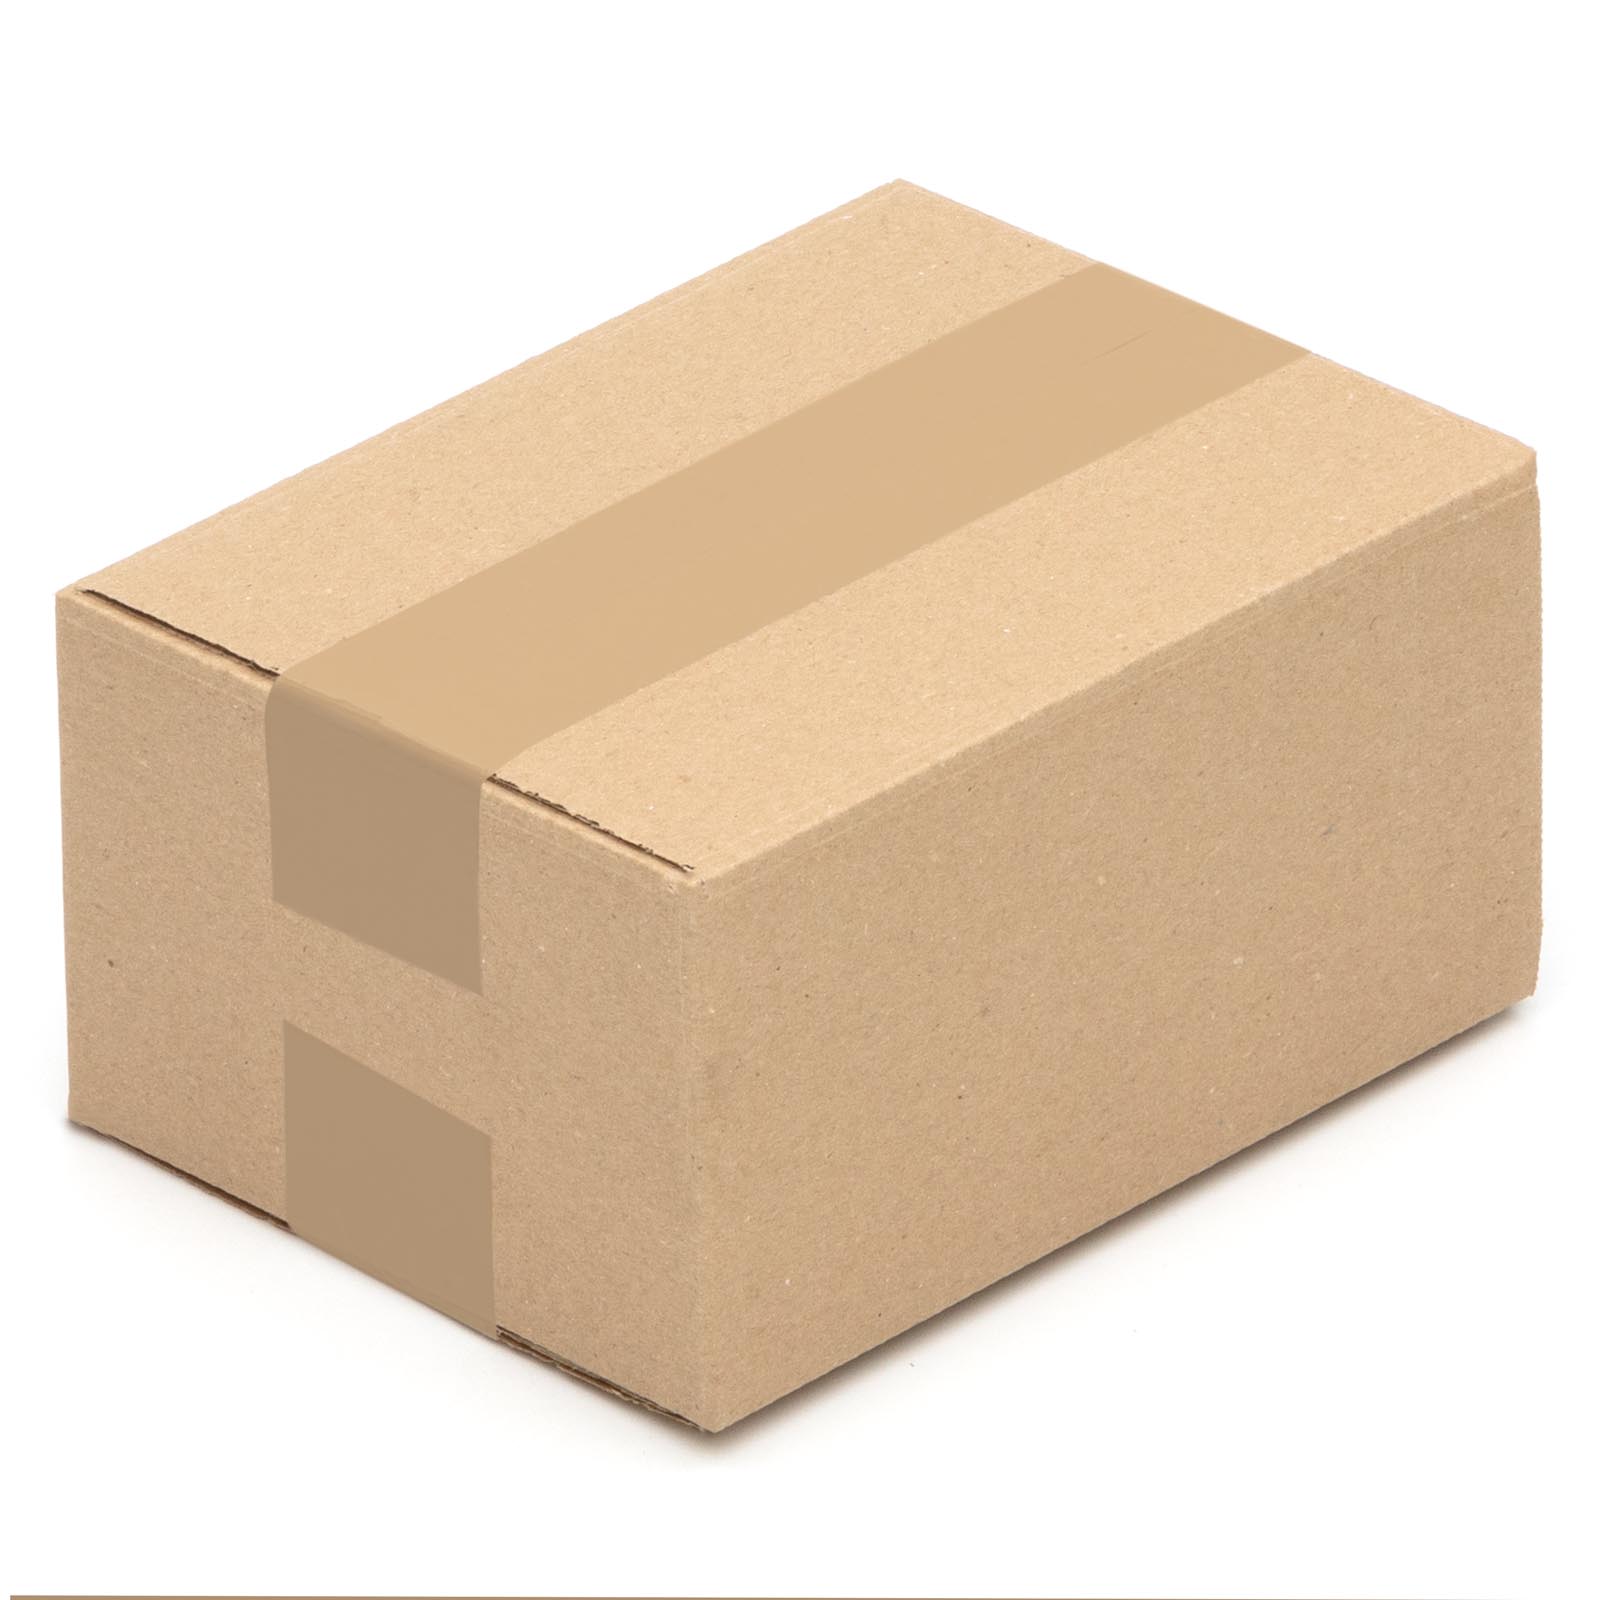 20 Größen Kartons Länge 100-199mm Faltkarton Kisten Versandkarton 1-wellig #2 